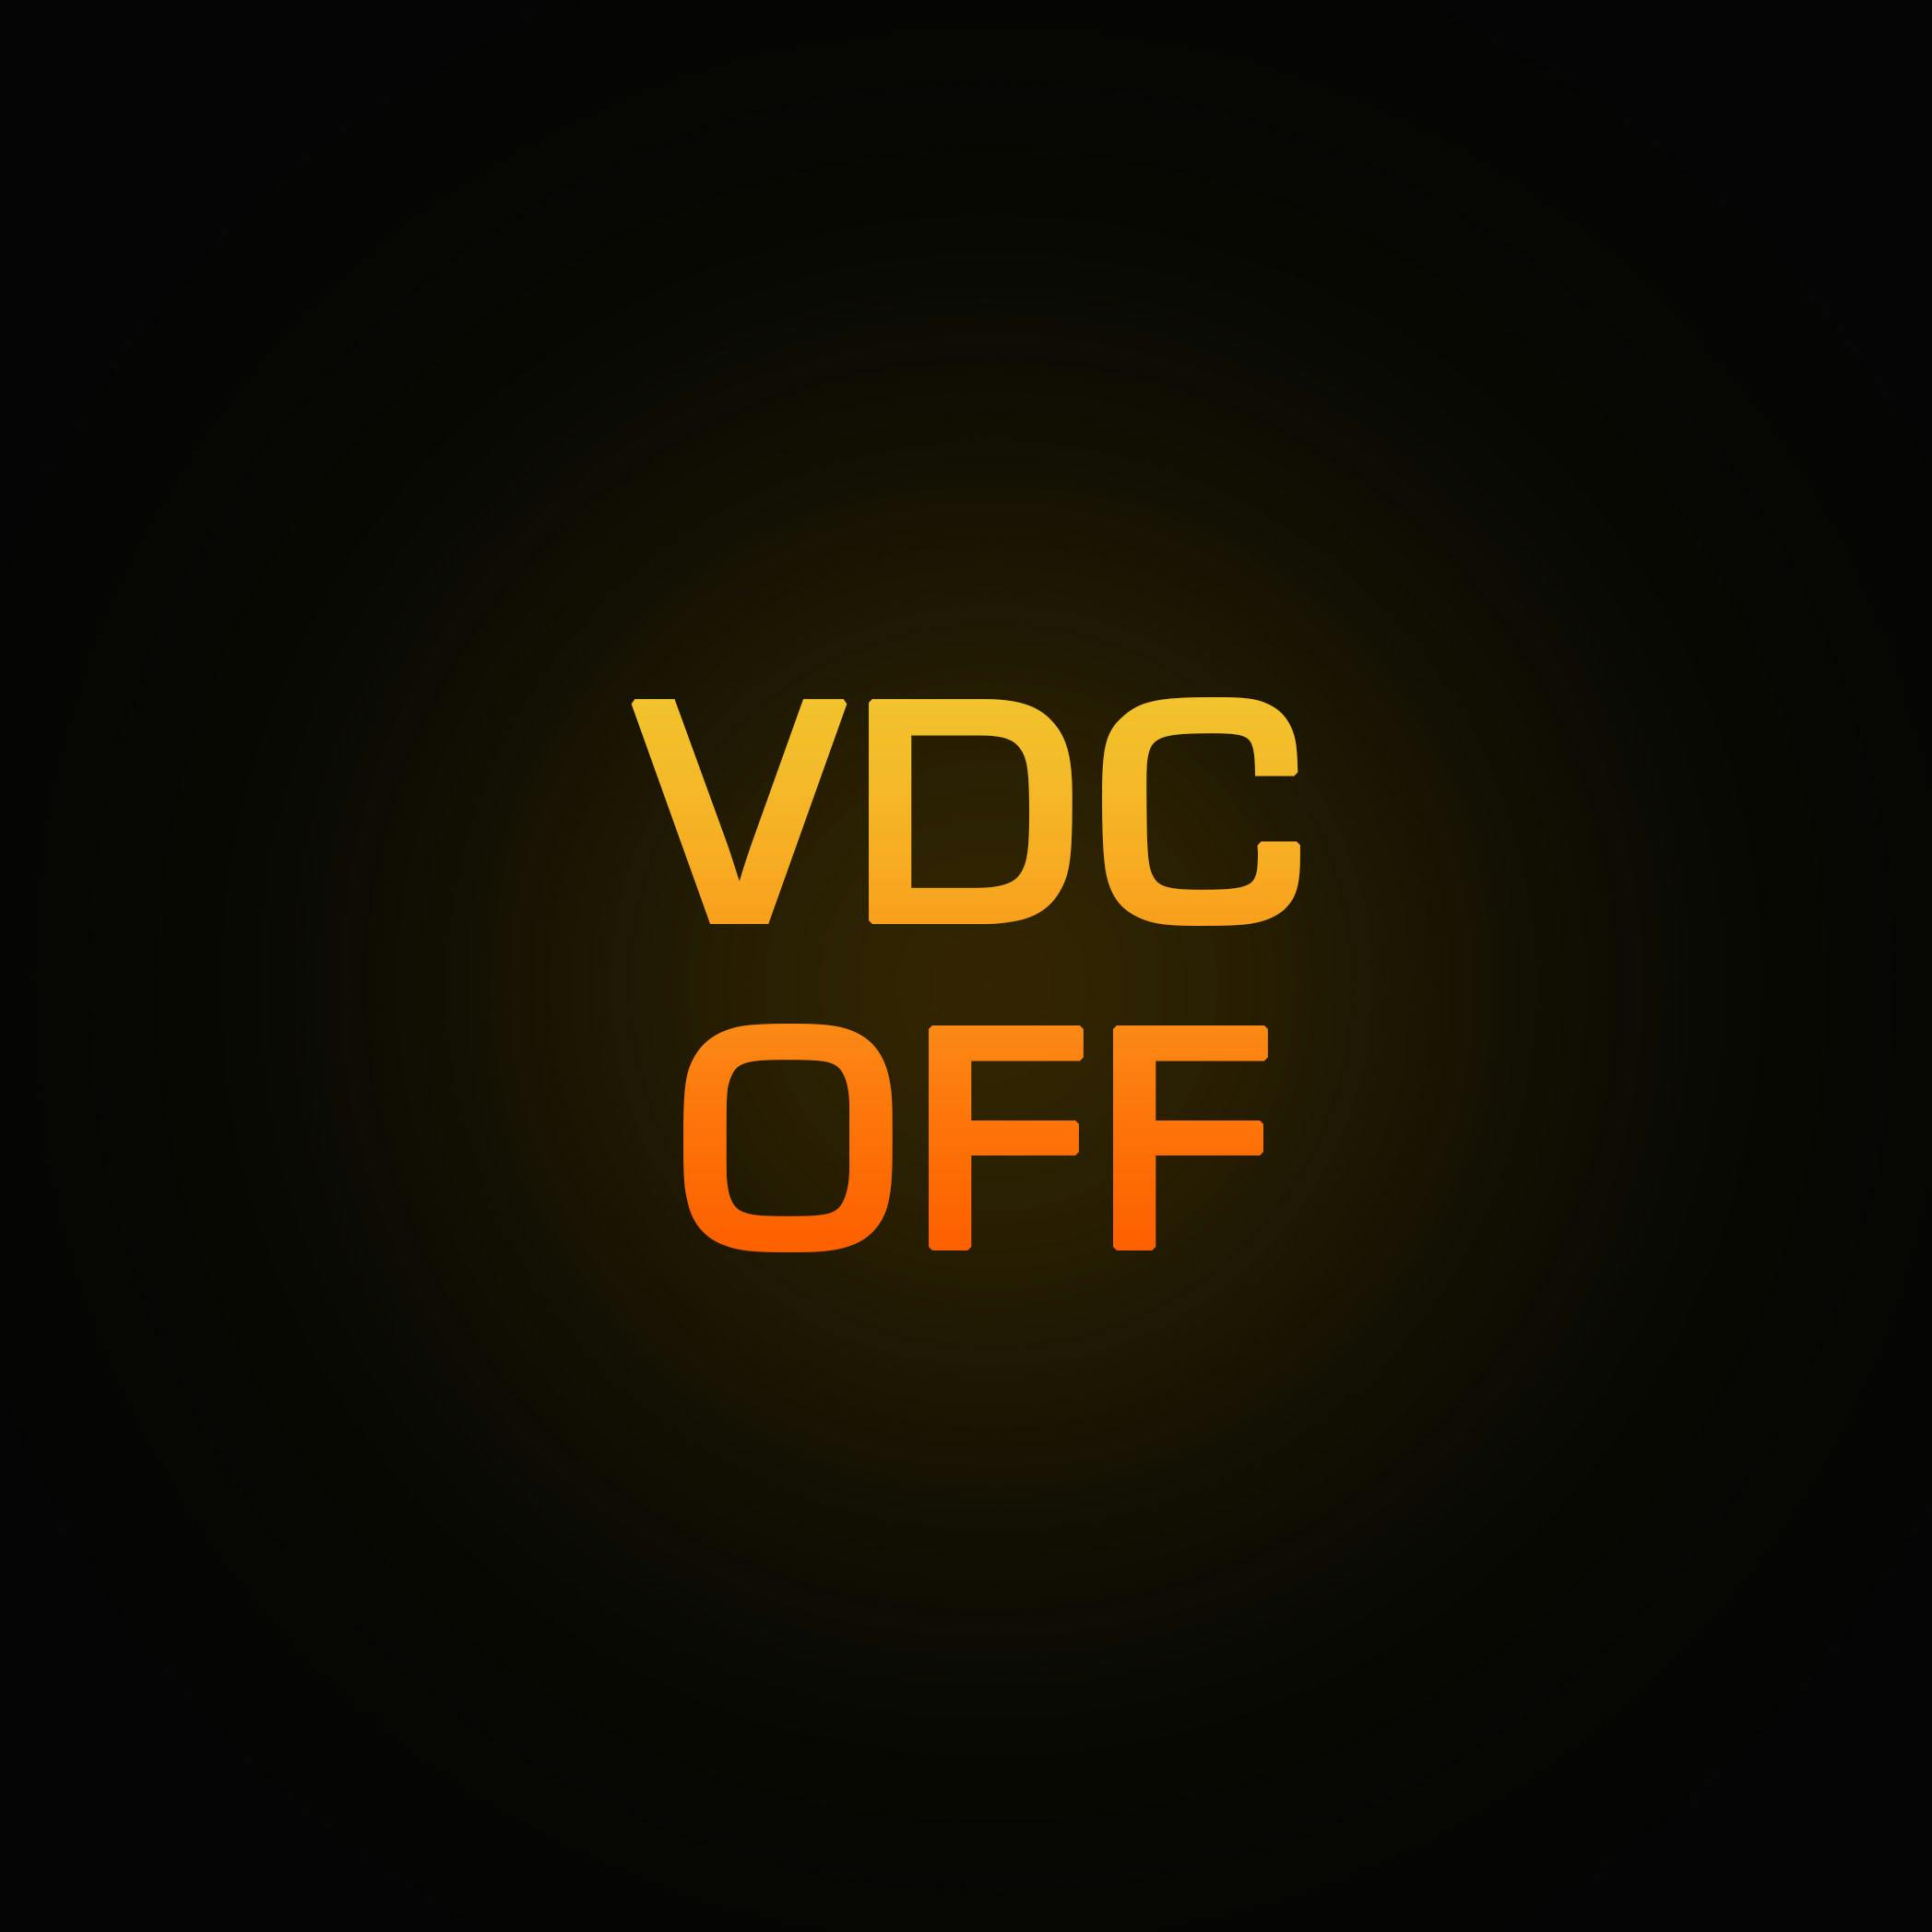 VDC OFF varningslampa